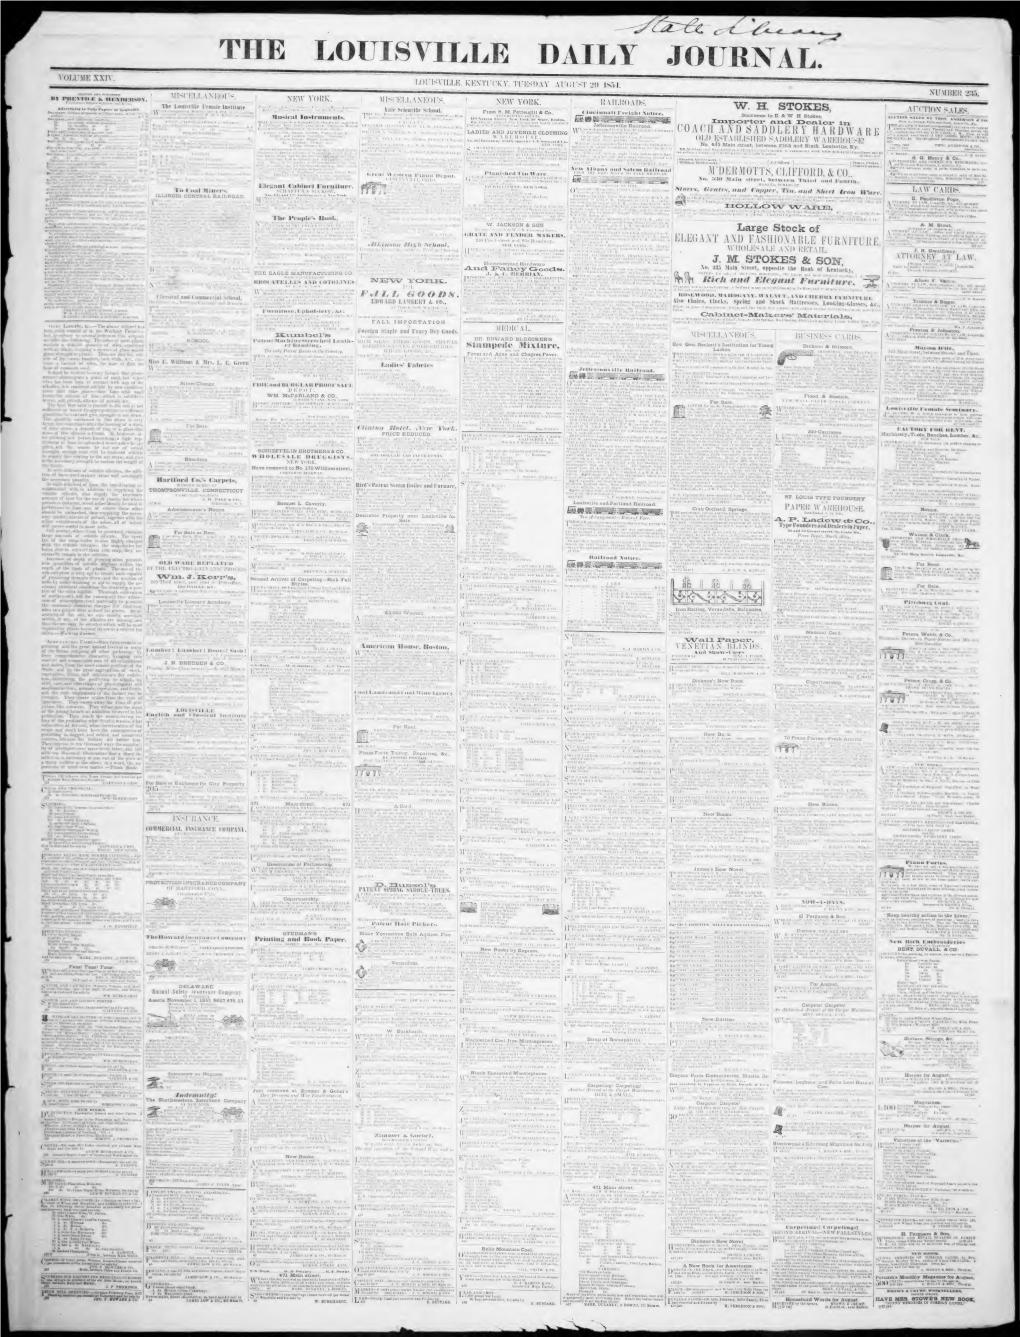 Louisville Daily Journal (Louisville, Ky. : 1833): 1854-08-29